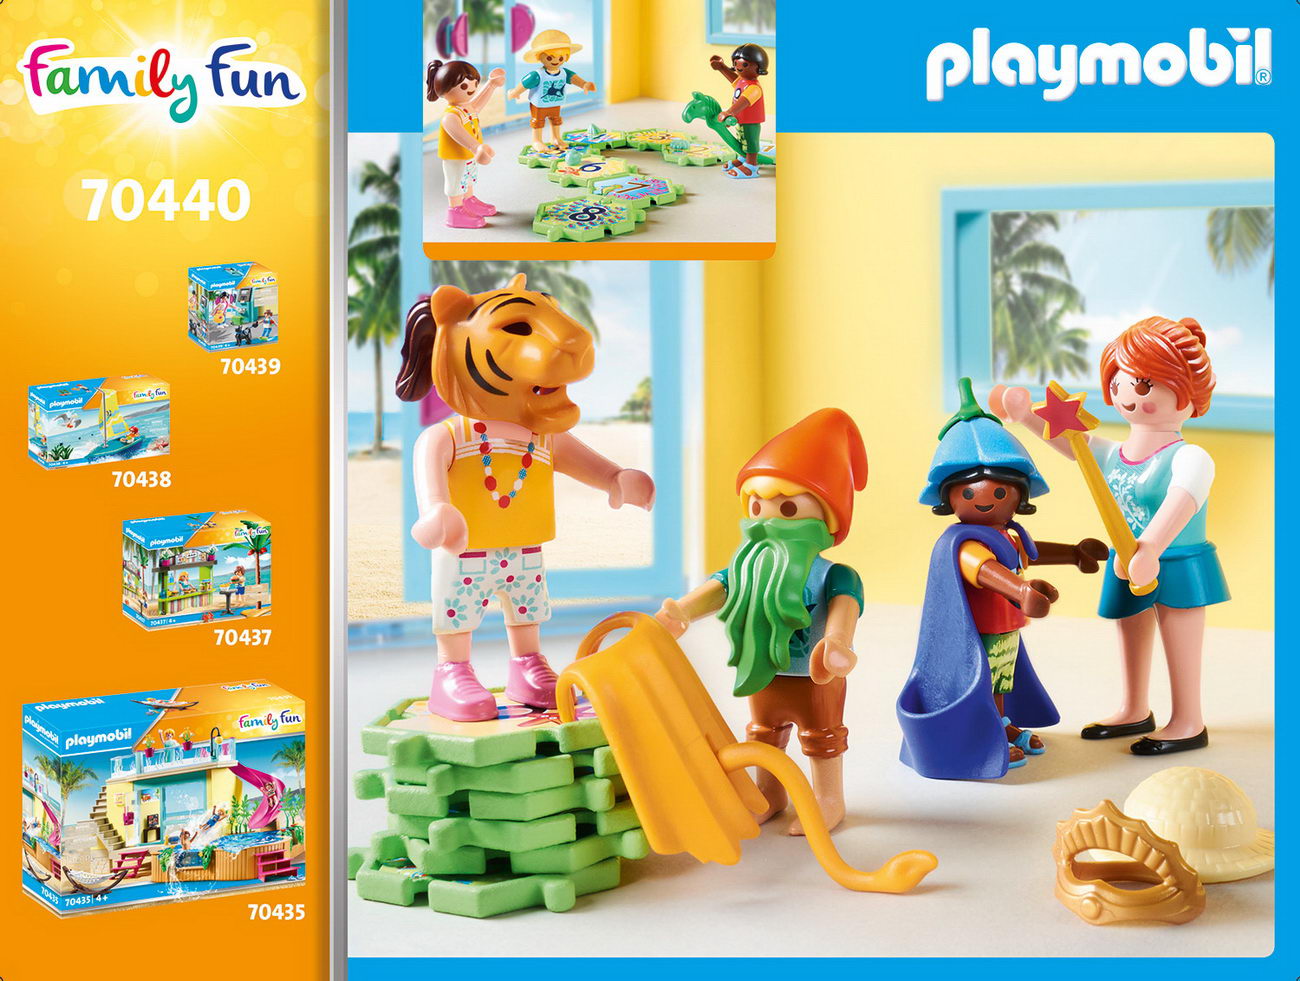 Playmobil 70440 - Kids Club - Family Fun